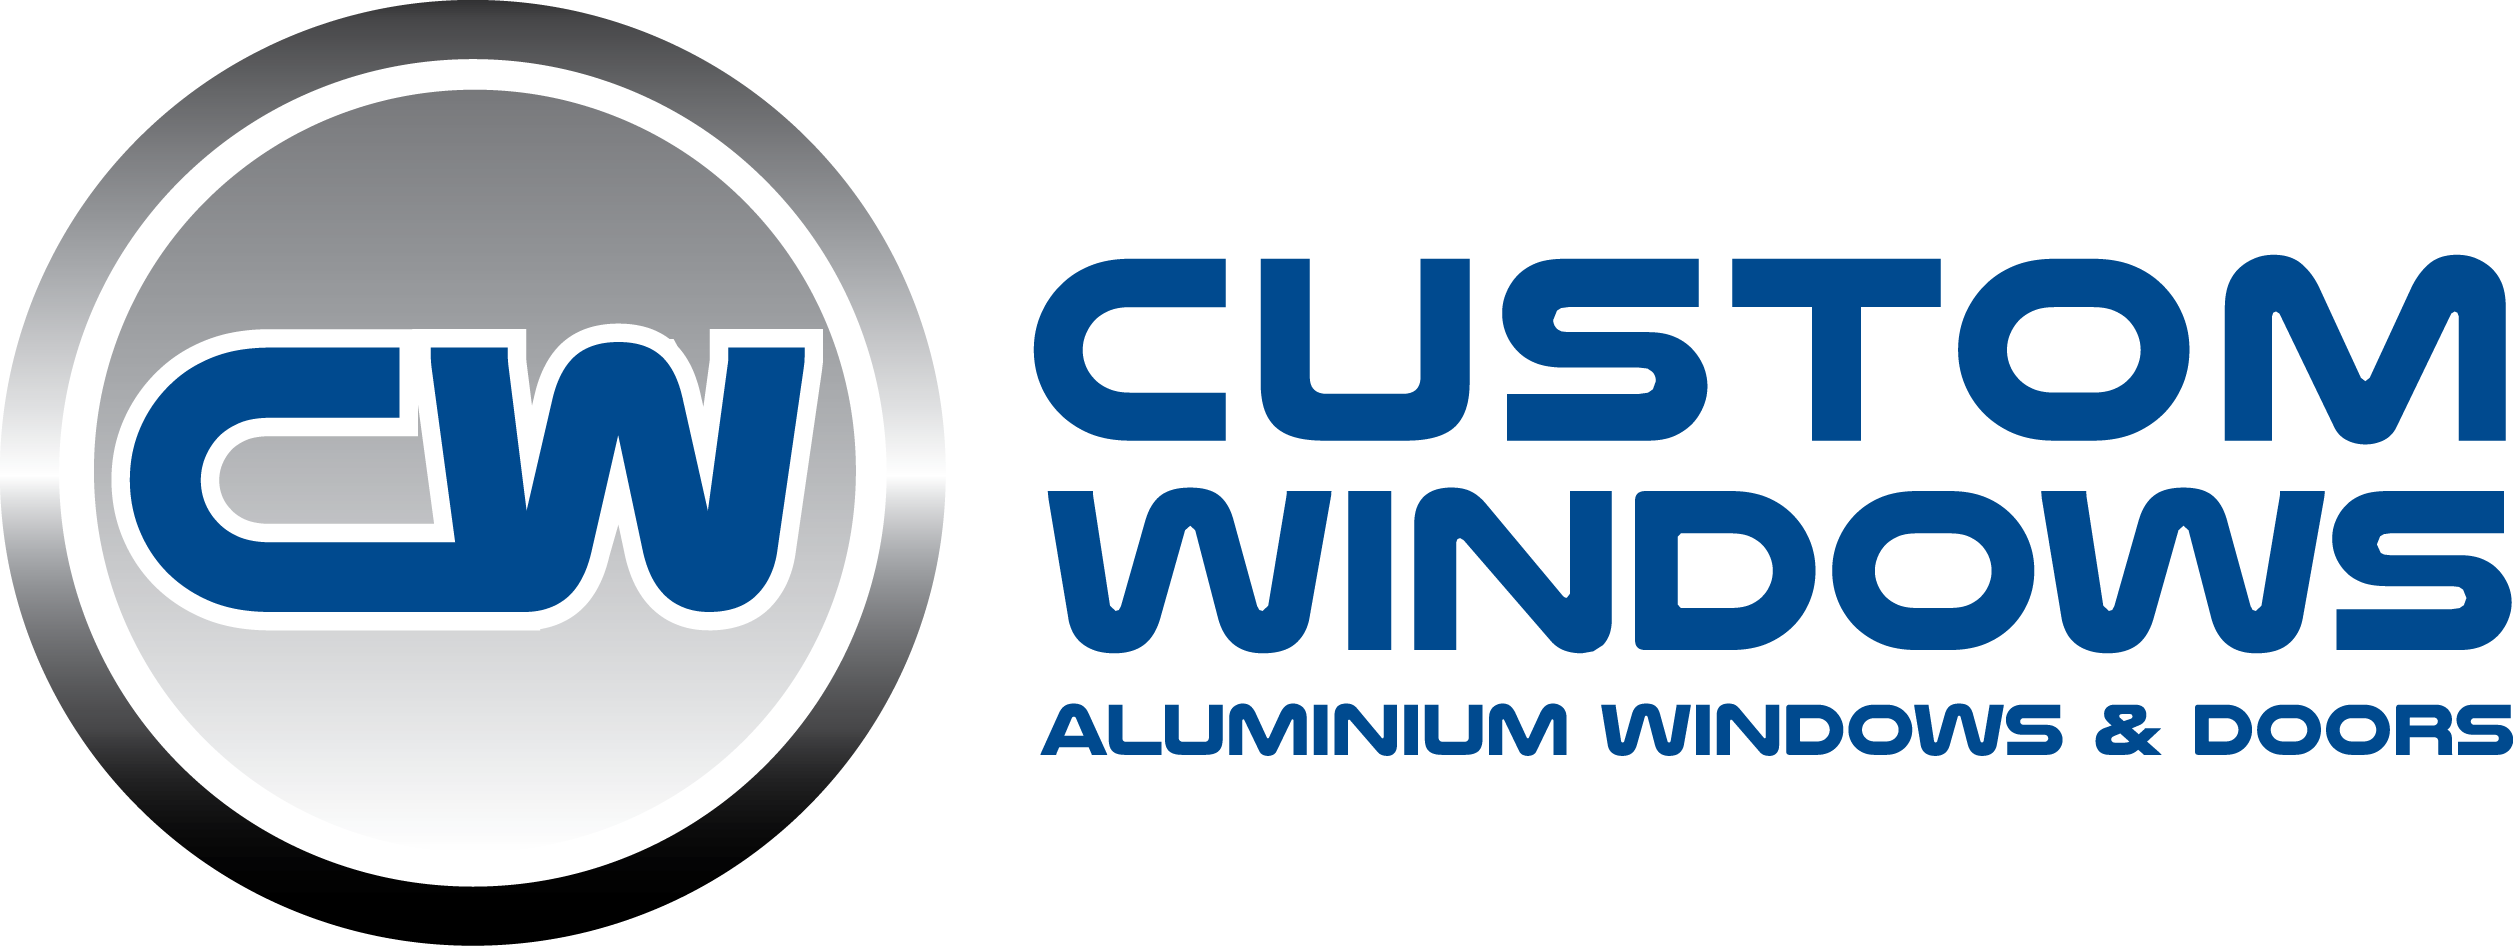 Custom windows logo